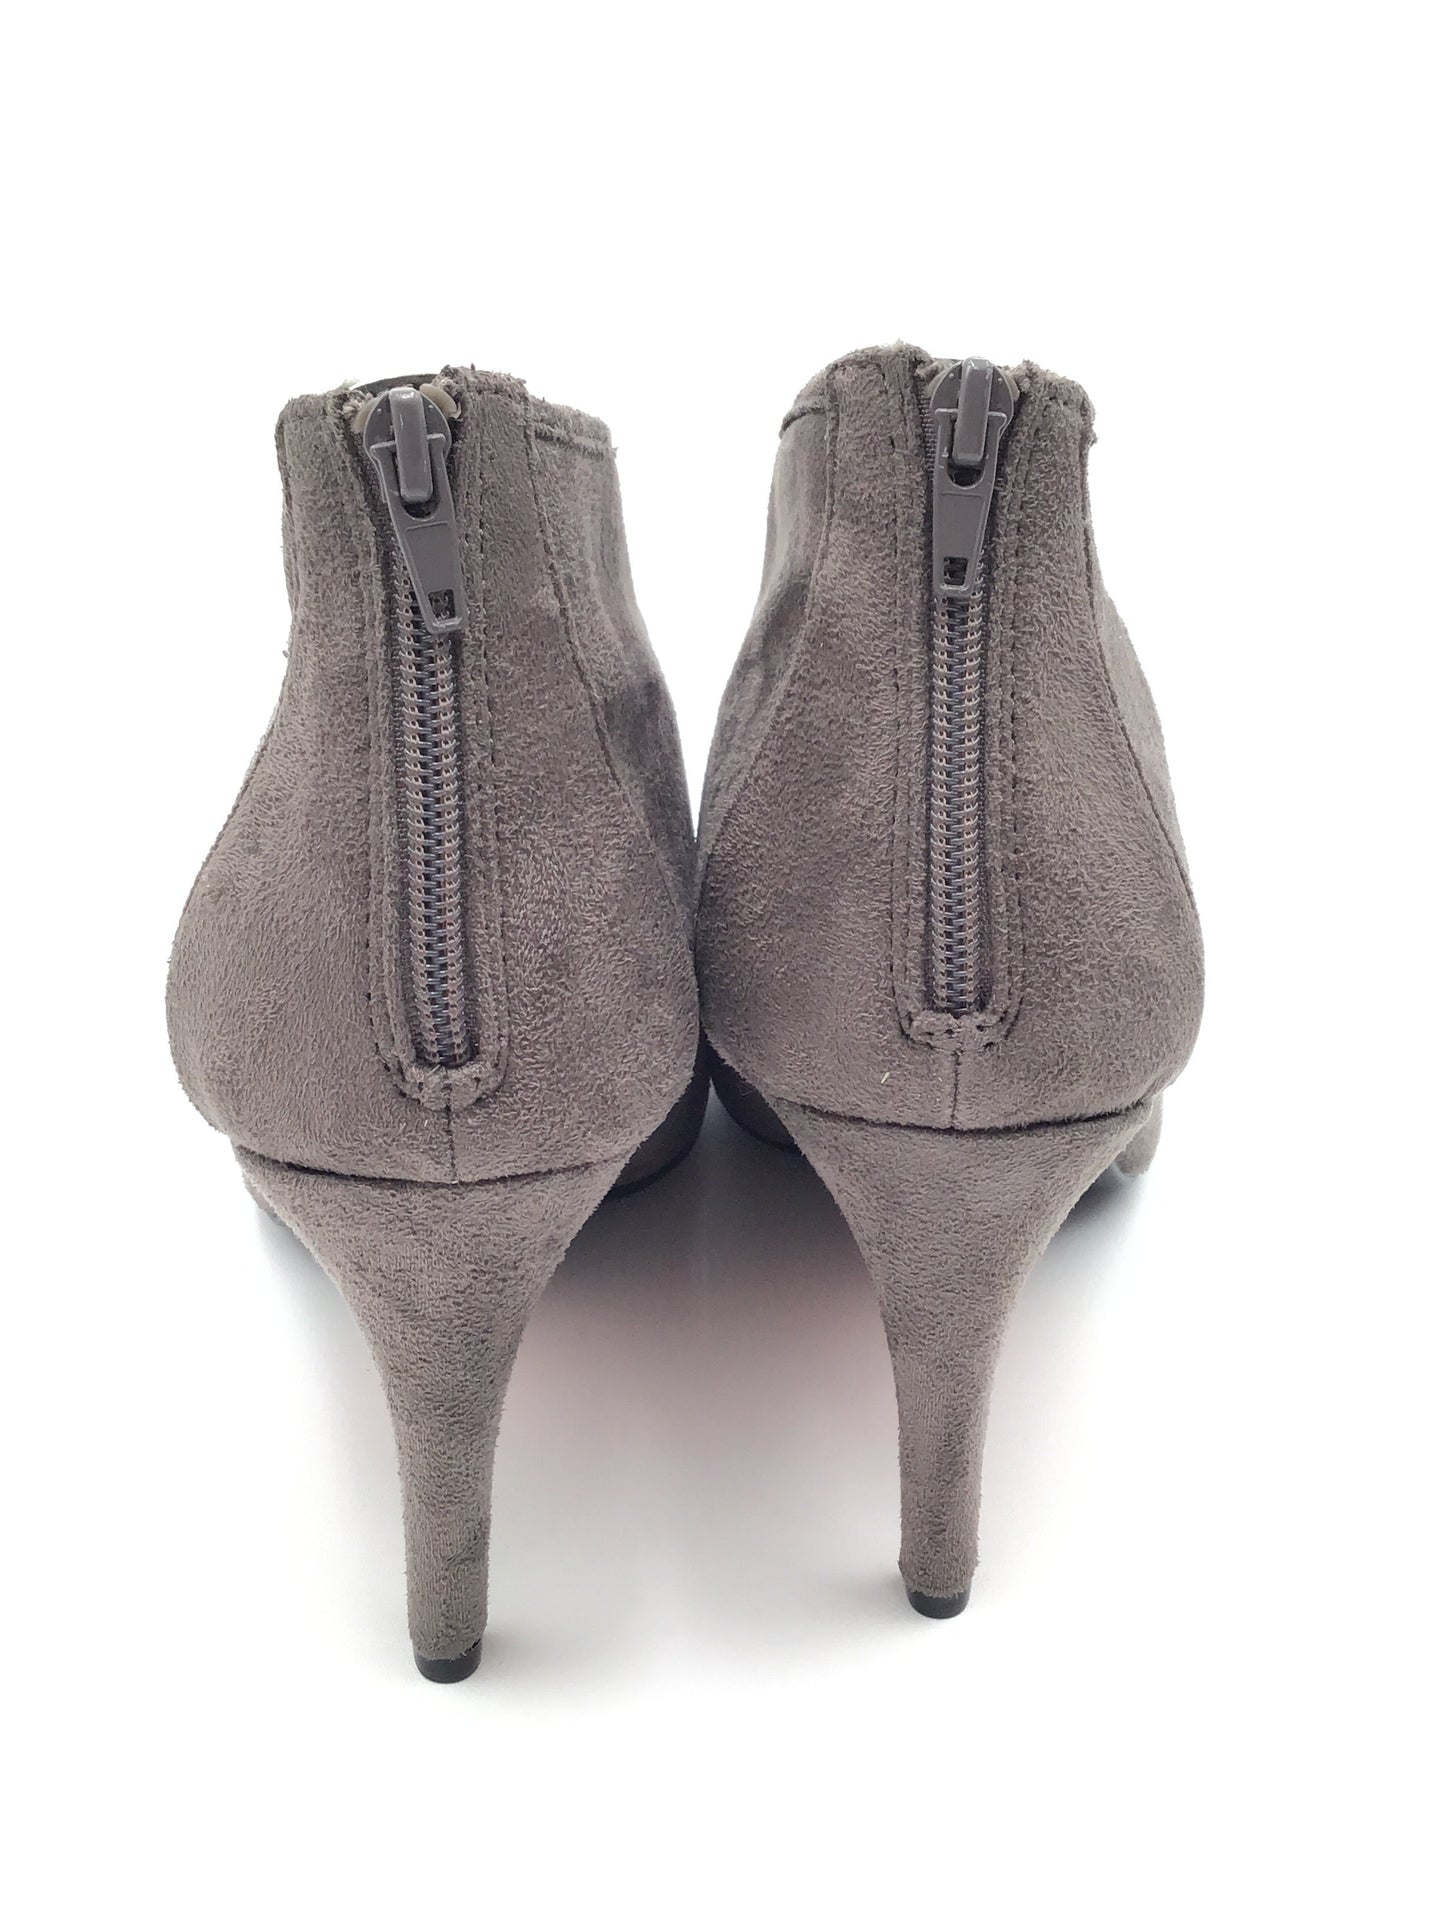 Grey Shoes Heels Stiletto Impo, Size 8